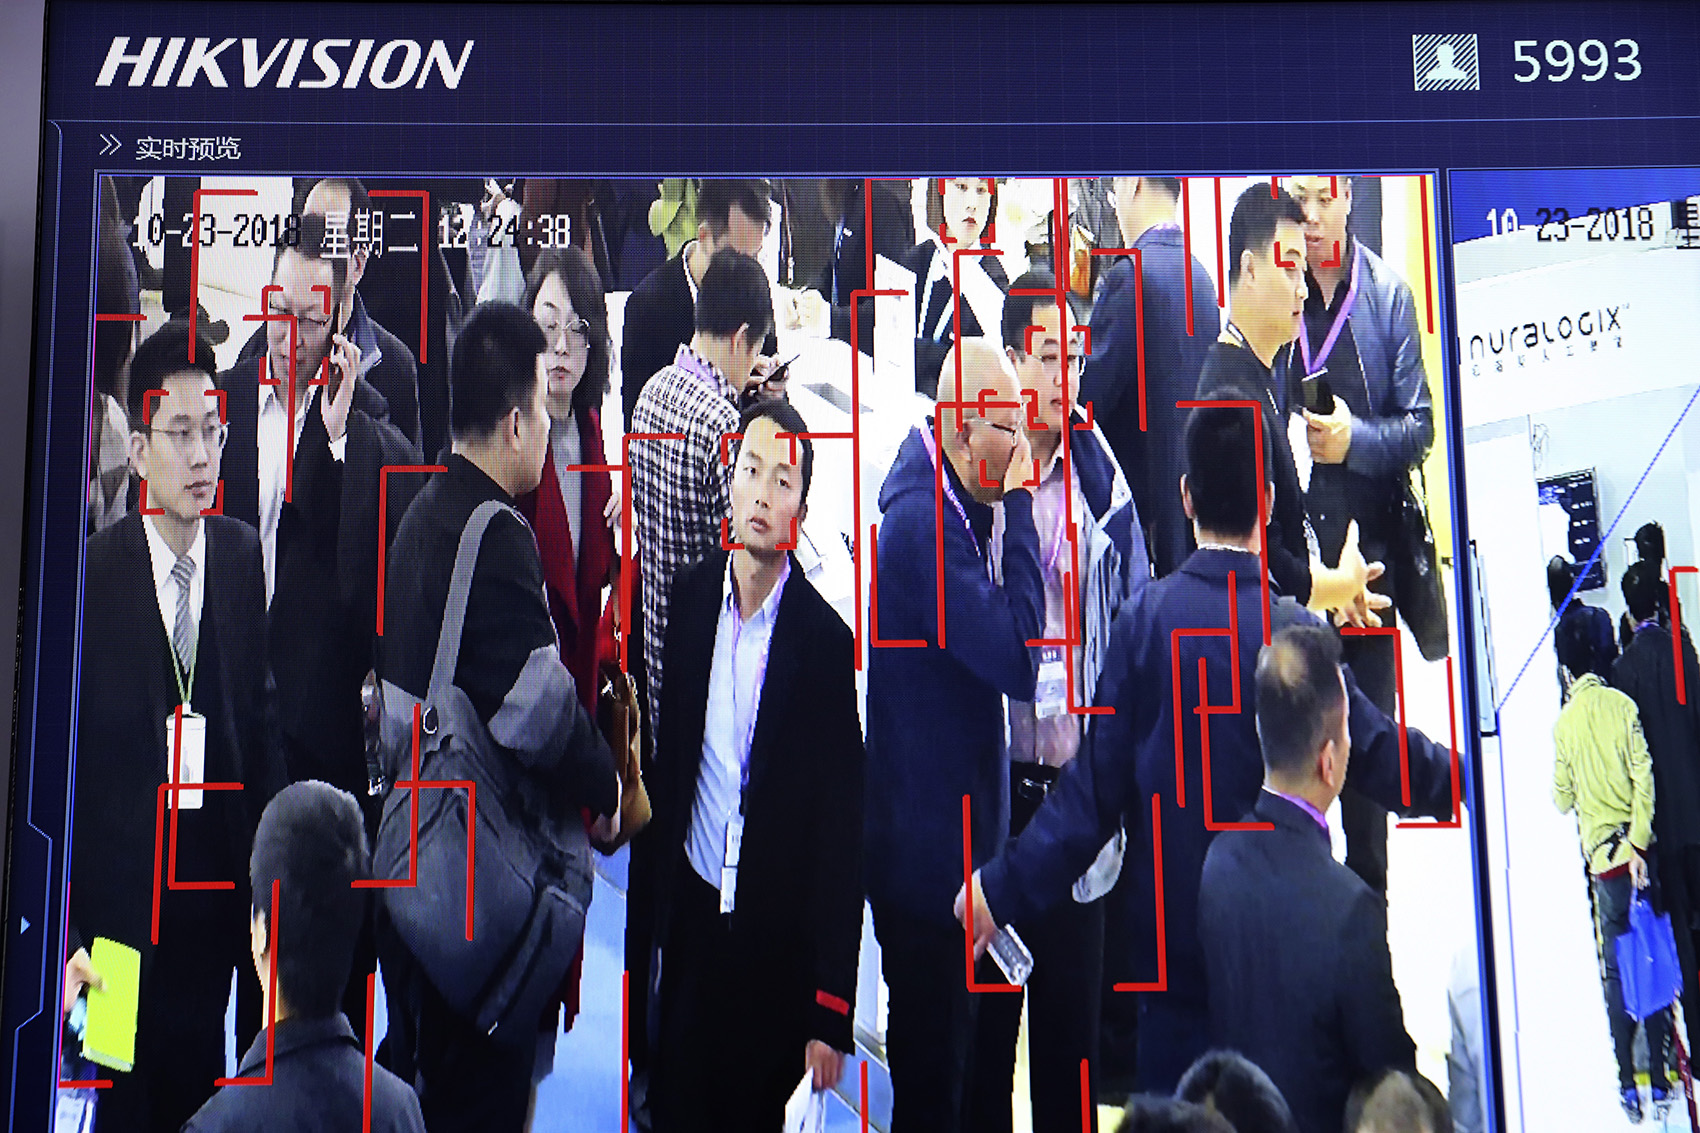 hikvision facial recognition camera